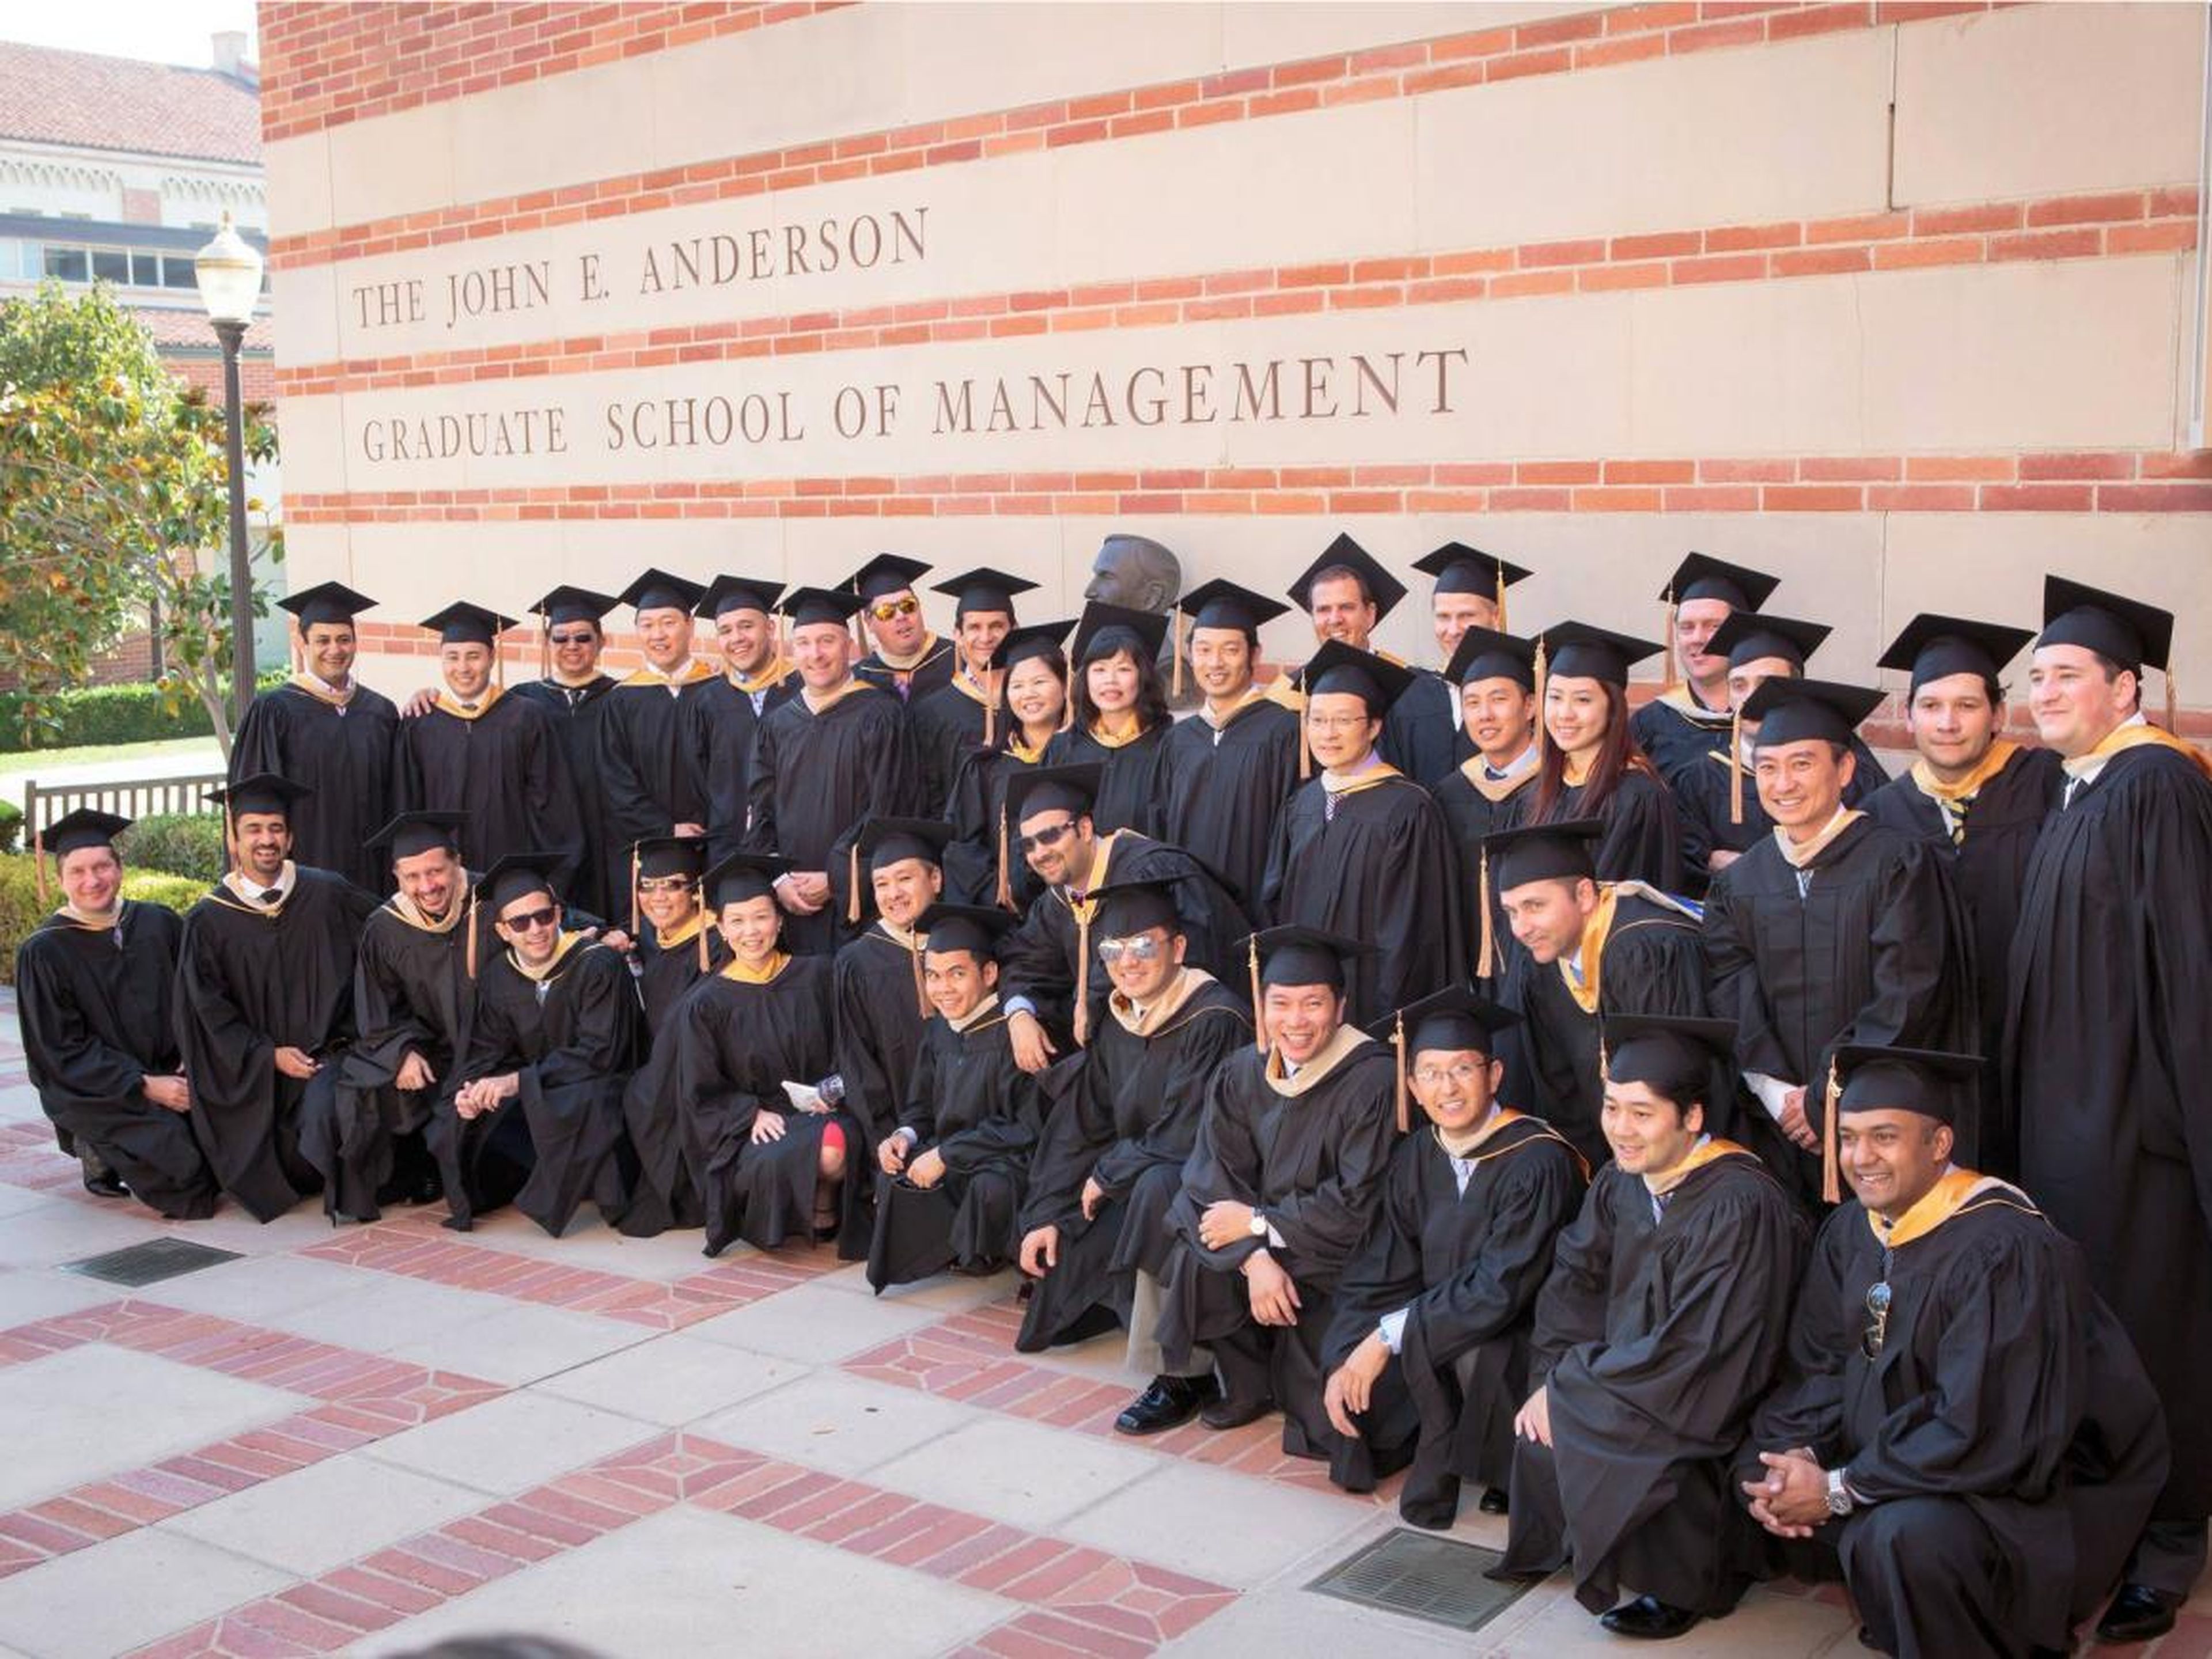 13. UCLA (Anderson) grads earn an average post-graduation salary of $120K to $130K.